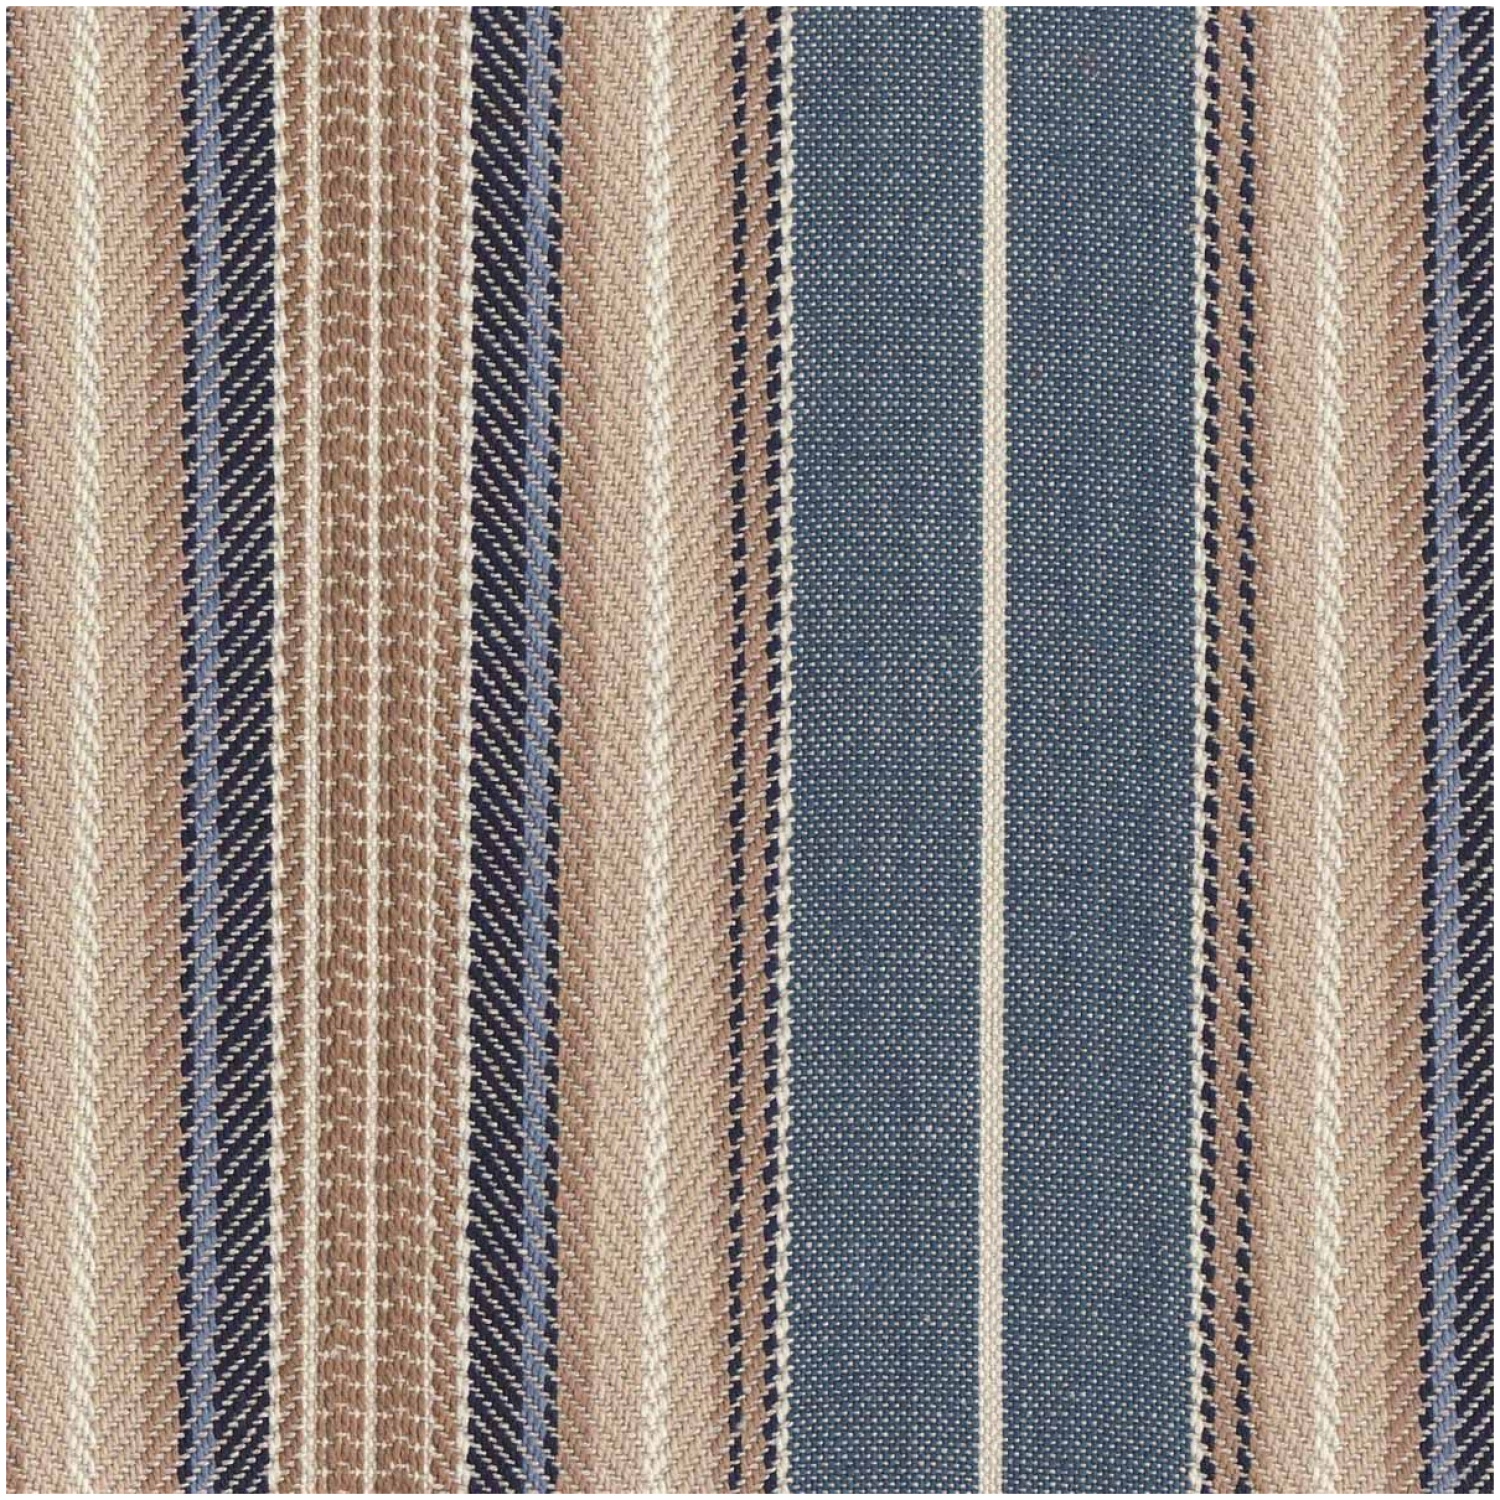 Hh-Montan/Blue - Multi Purpose Fabric Suitable For Drapery